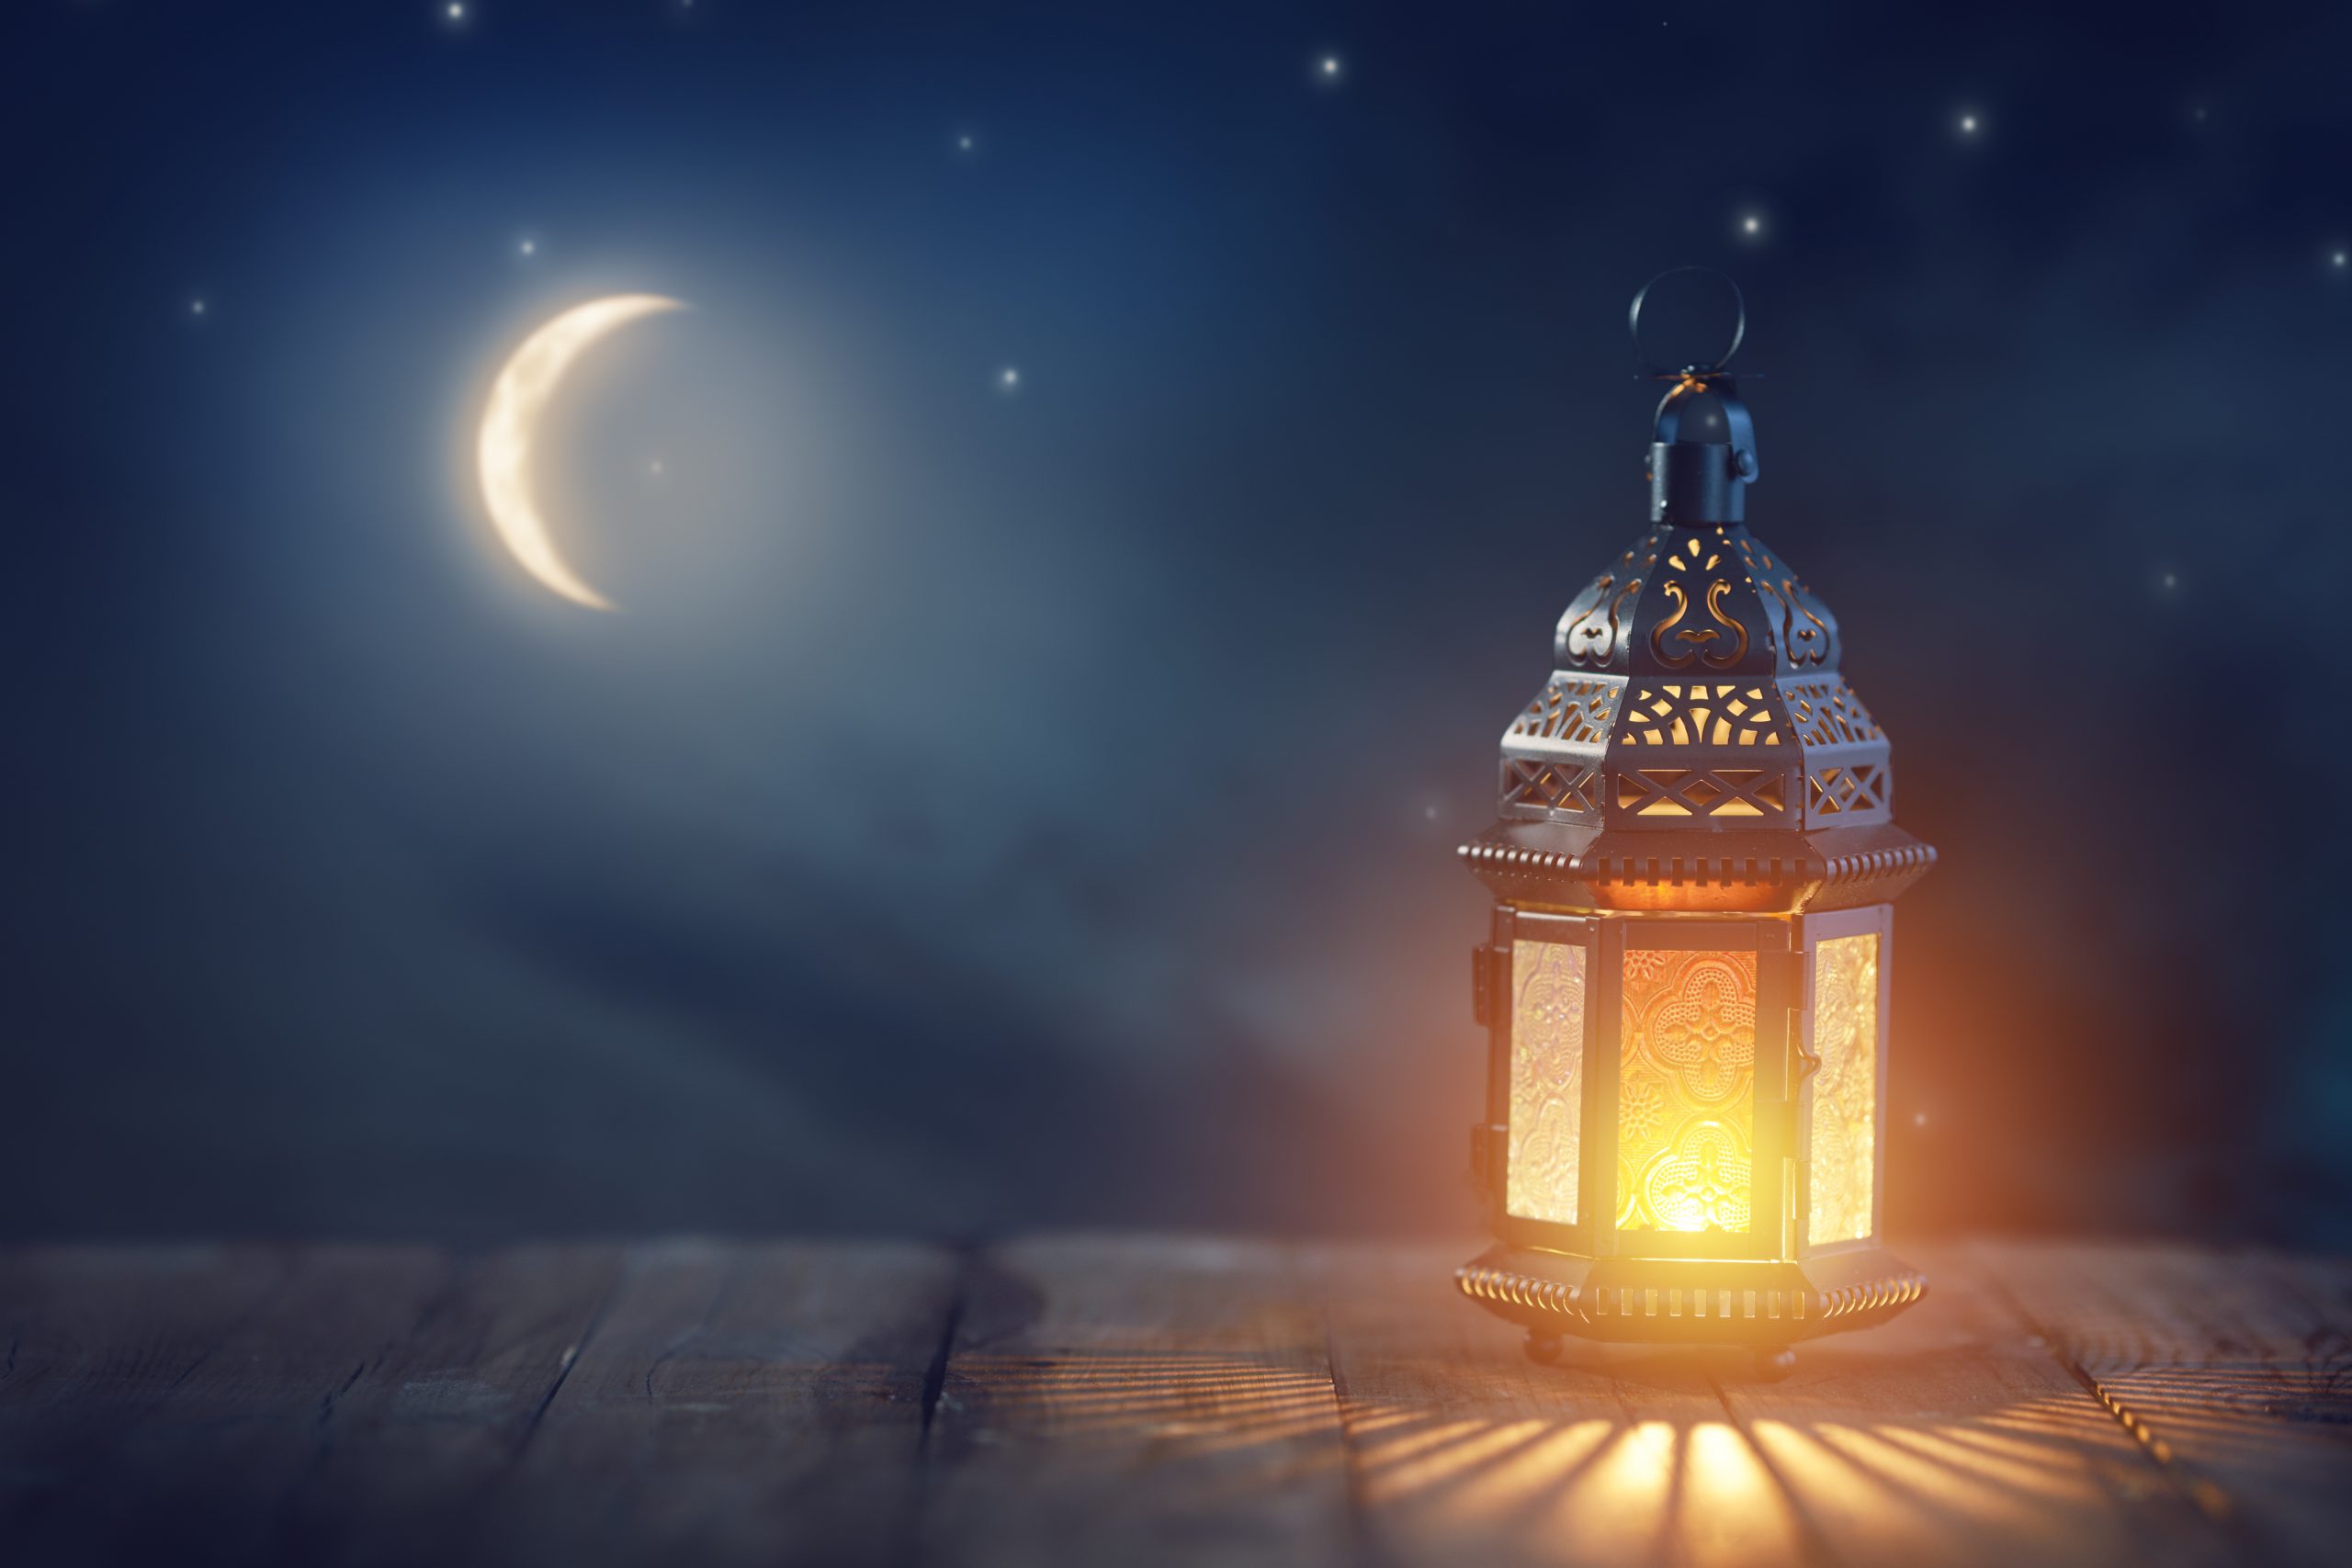 ramadan-this-destination-tops-the-list-for-ramadan-getaways-it